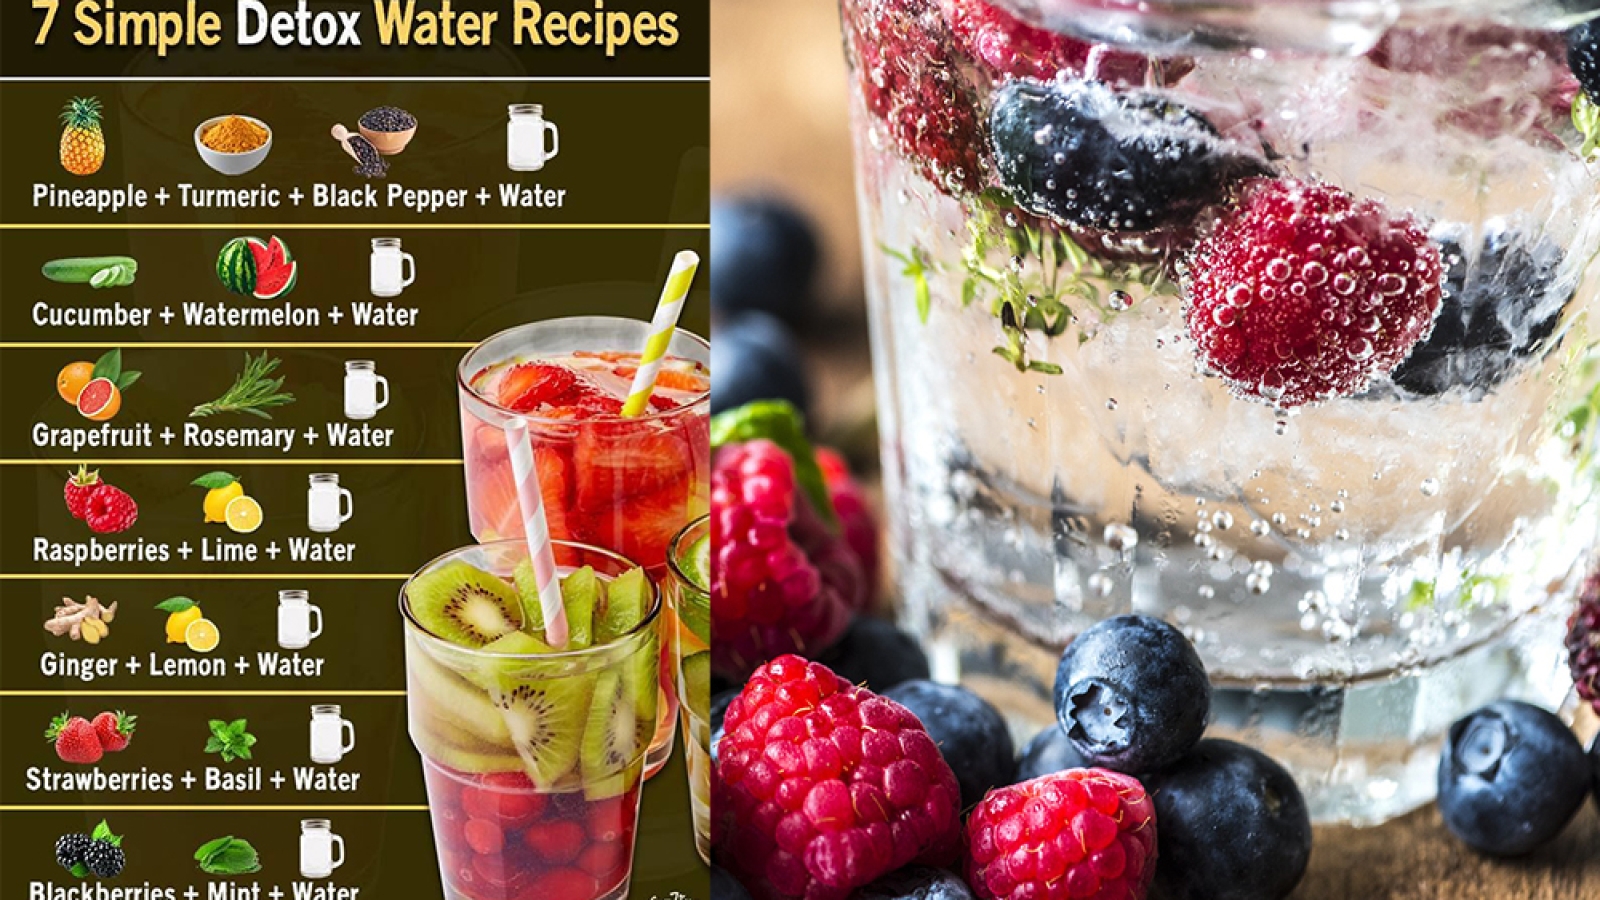 7-Simple-Detox-Water-Recipes-blog